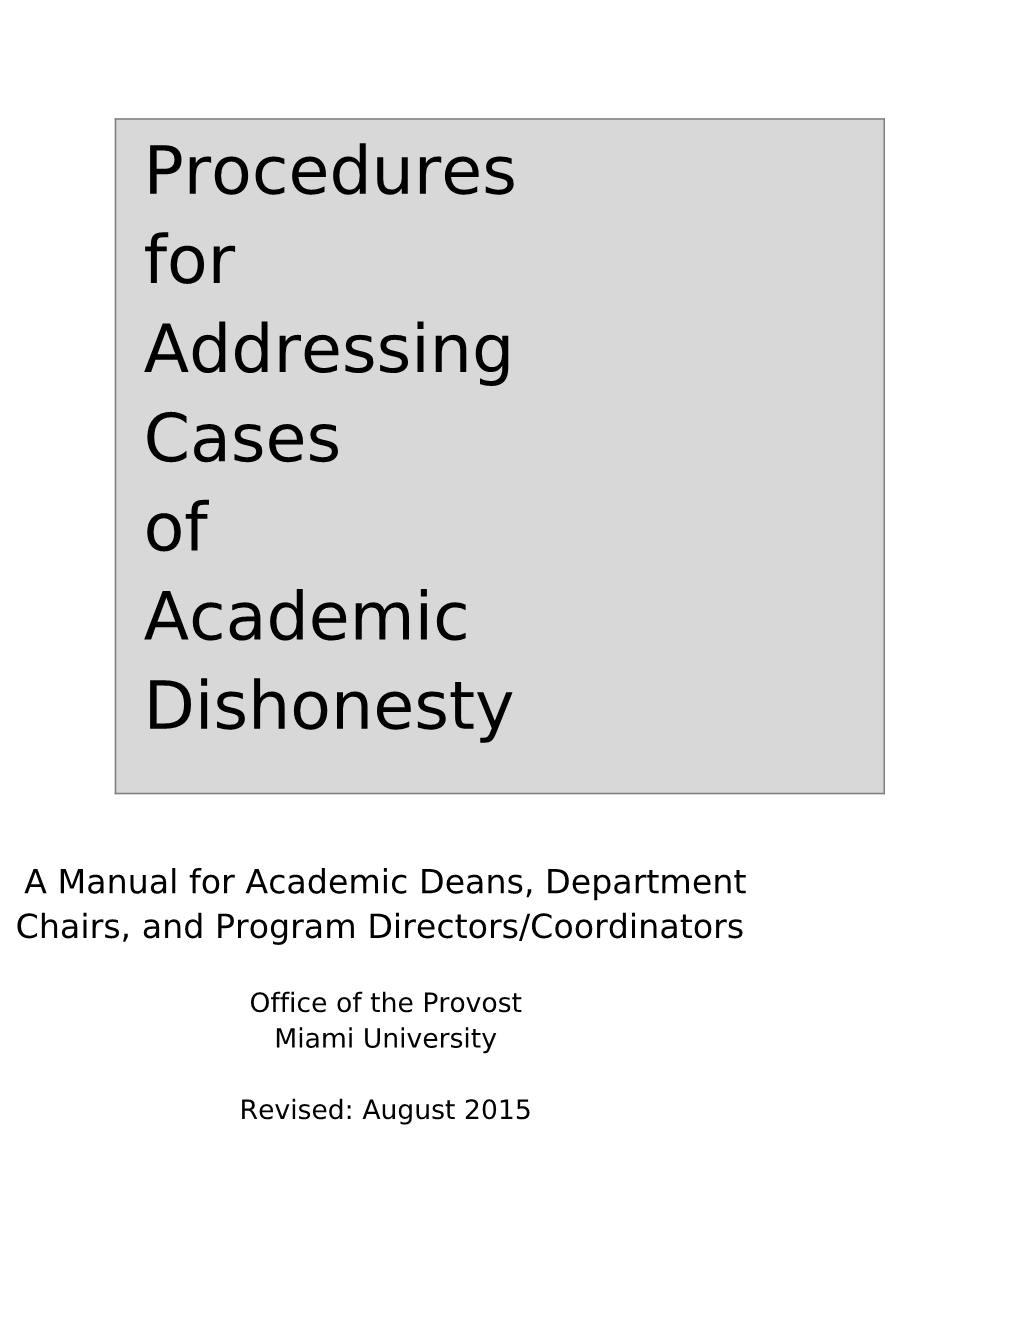 Procedures for Addressing Cases of Academic Dishonesty